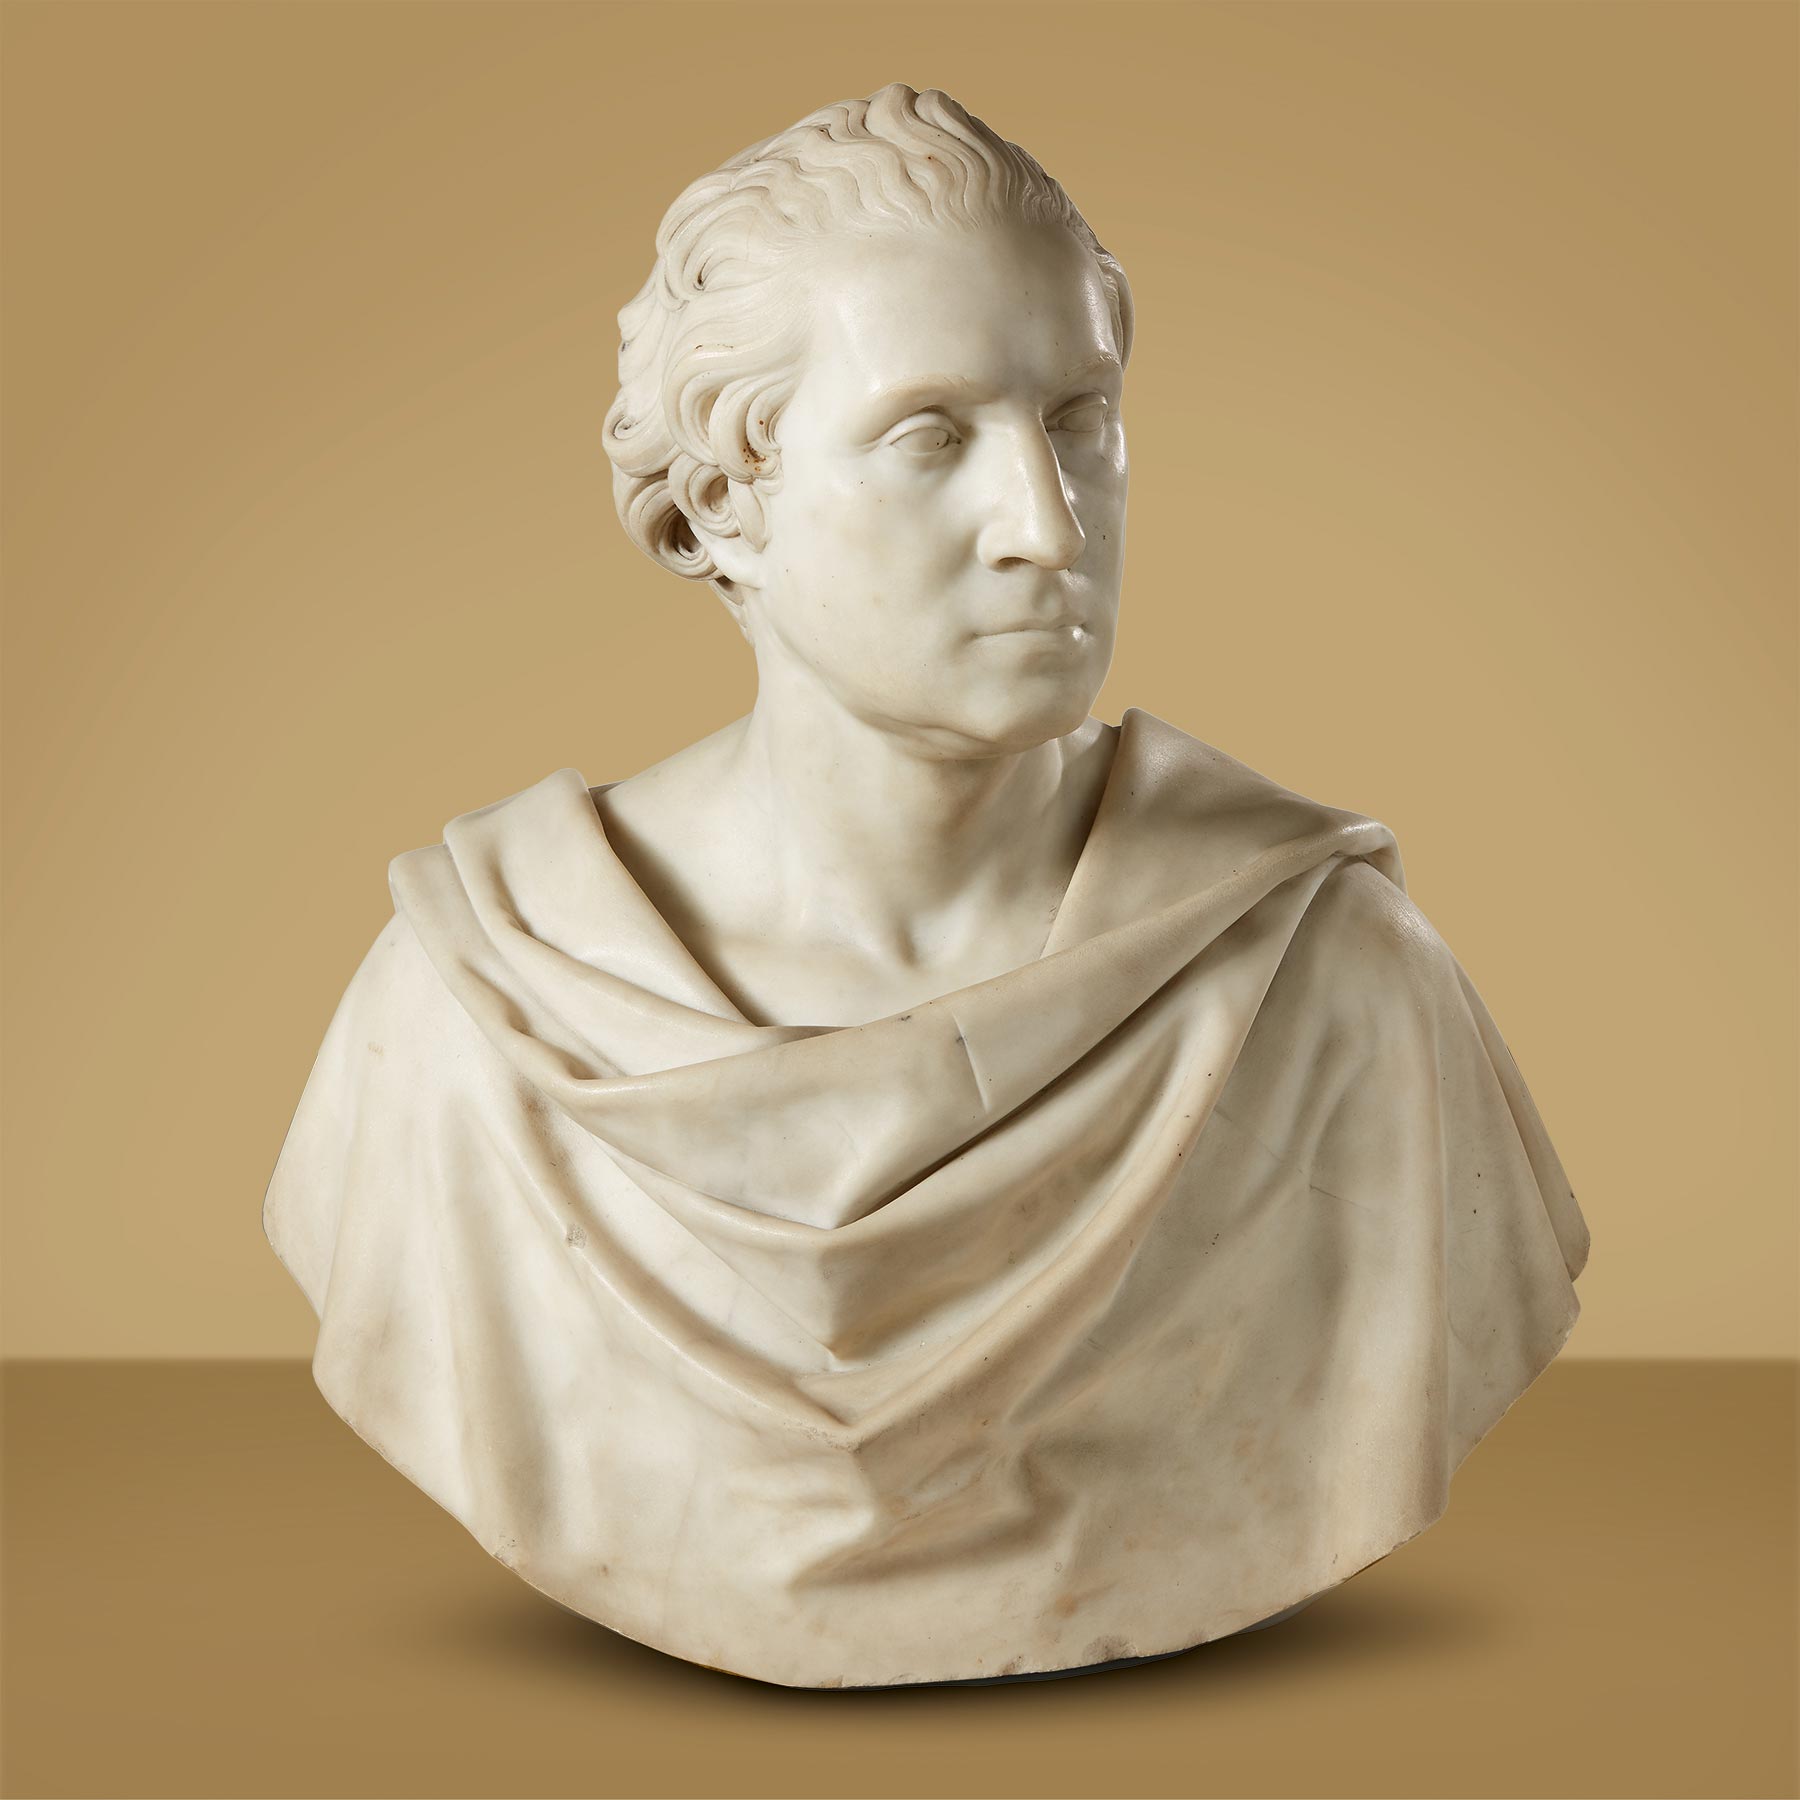 A bust of George Washington